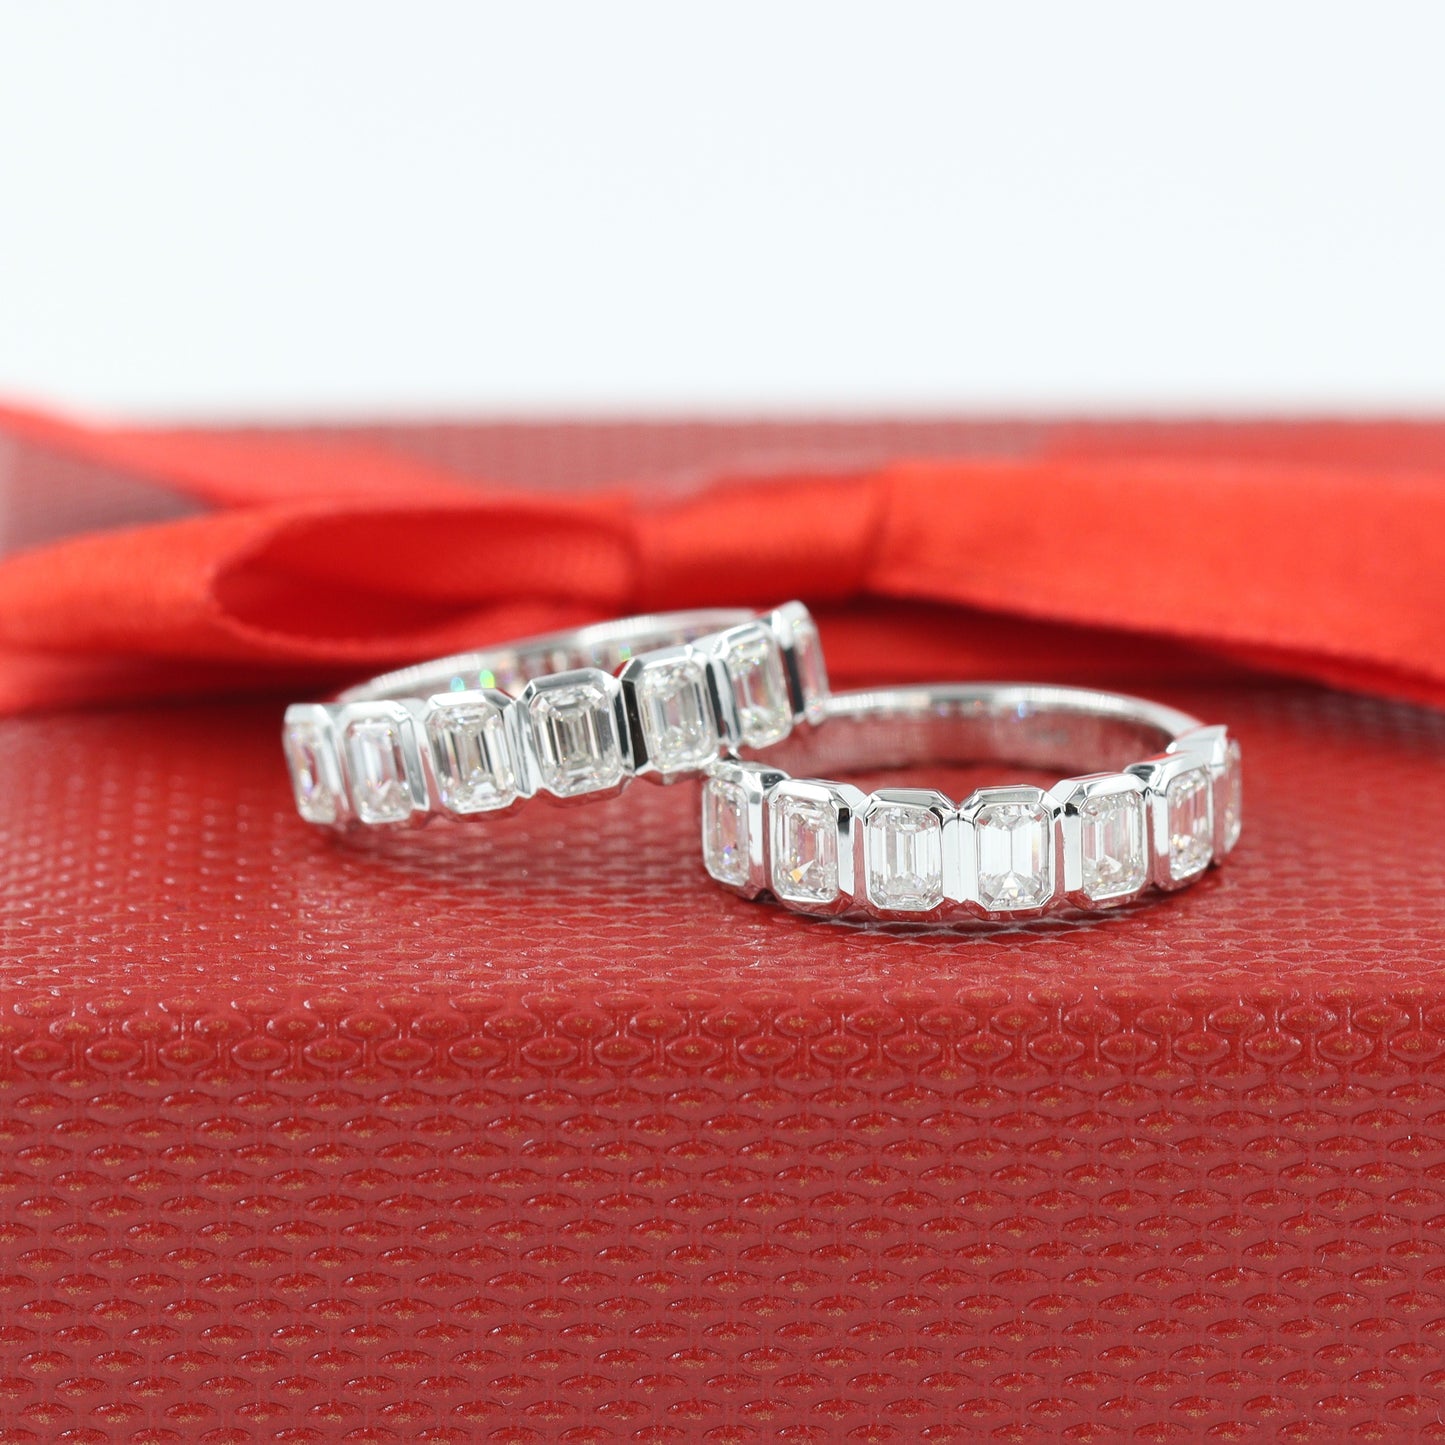 1ct Emerald Cut Diamond Bezel set Wedding Band/ Bezel Setting Emerald Cut Diamond Band/ Diamond Ring/ Anniversary gift Ring/ Stacking Band